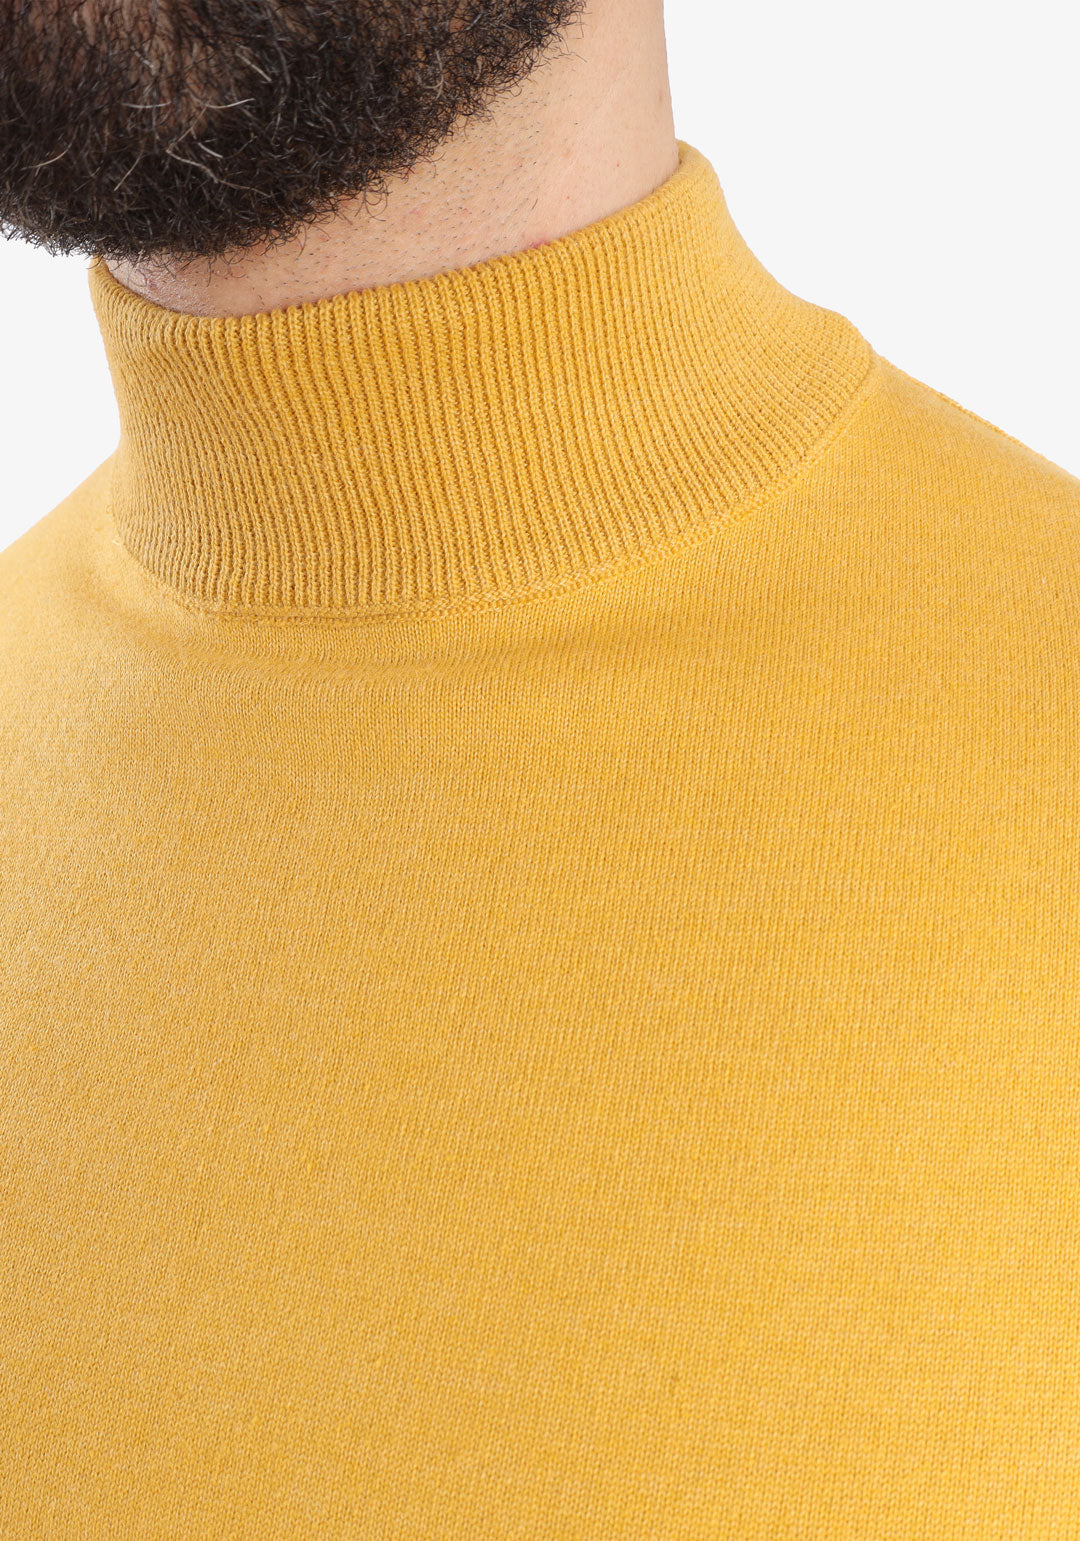 Mustard Half Collar Cotton Basic Plain Pullover